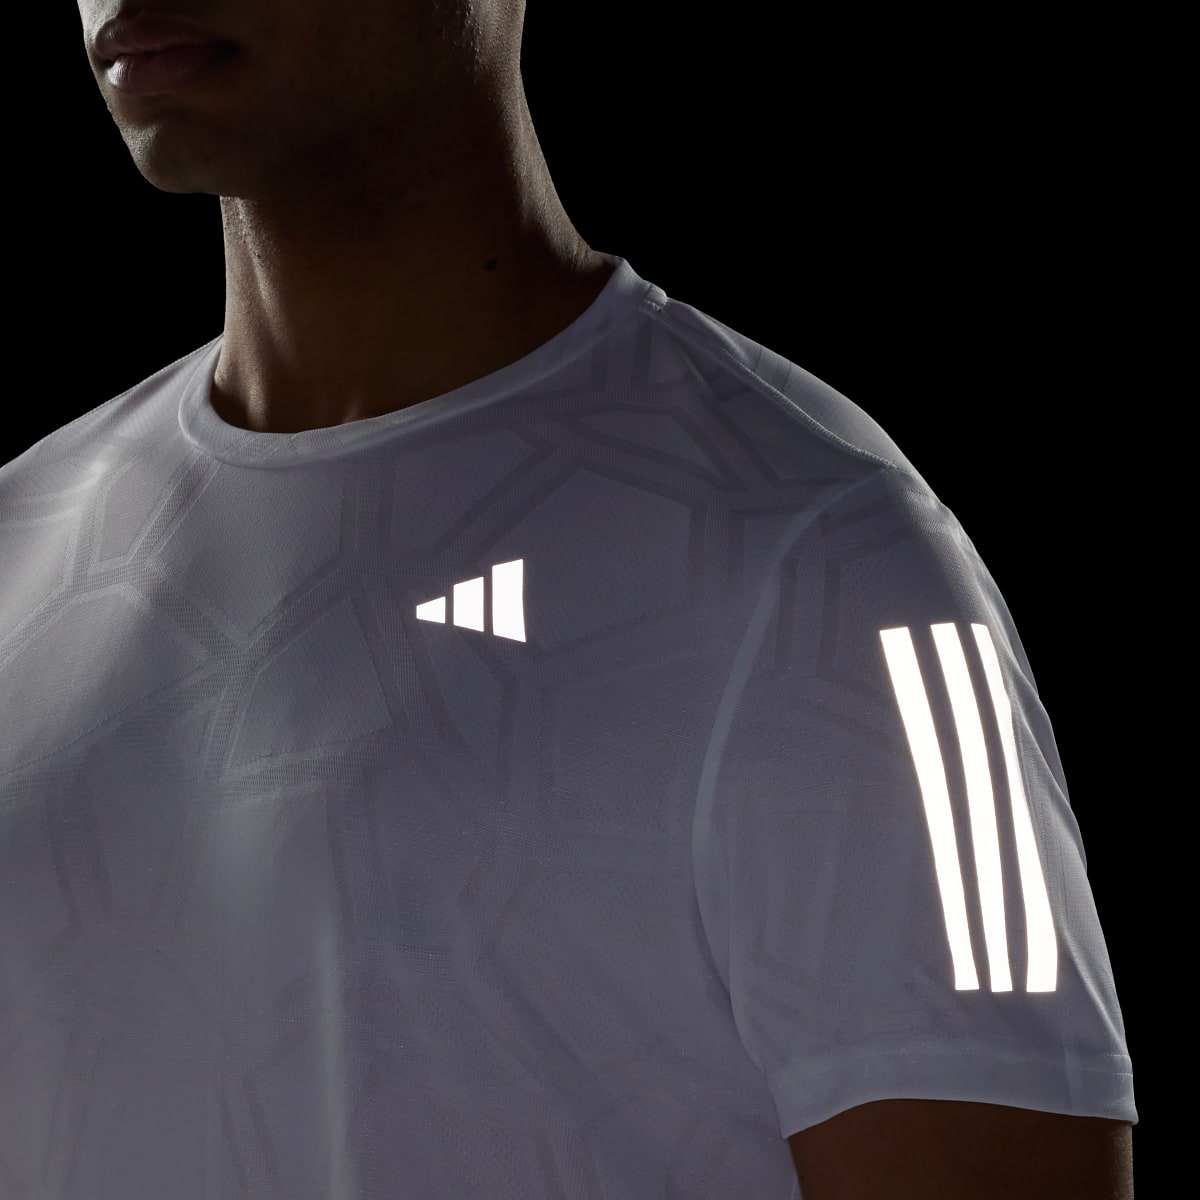 Adidas T-shirt Own the Run Carbon Meastured. 7